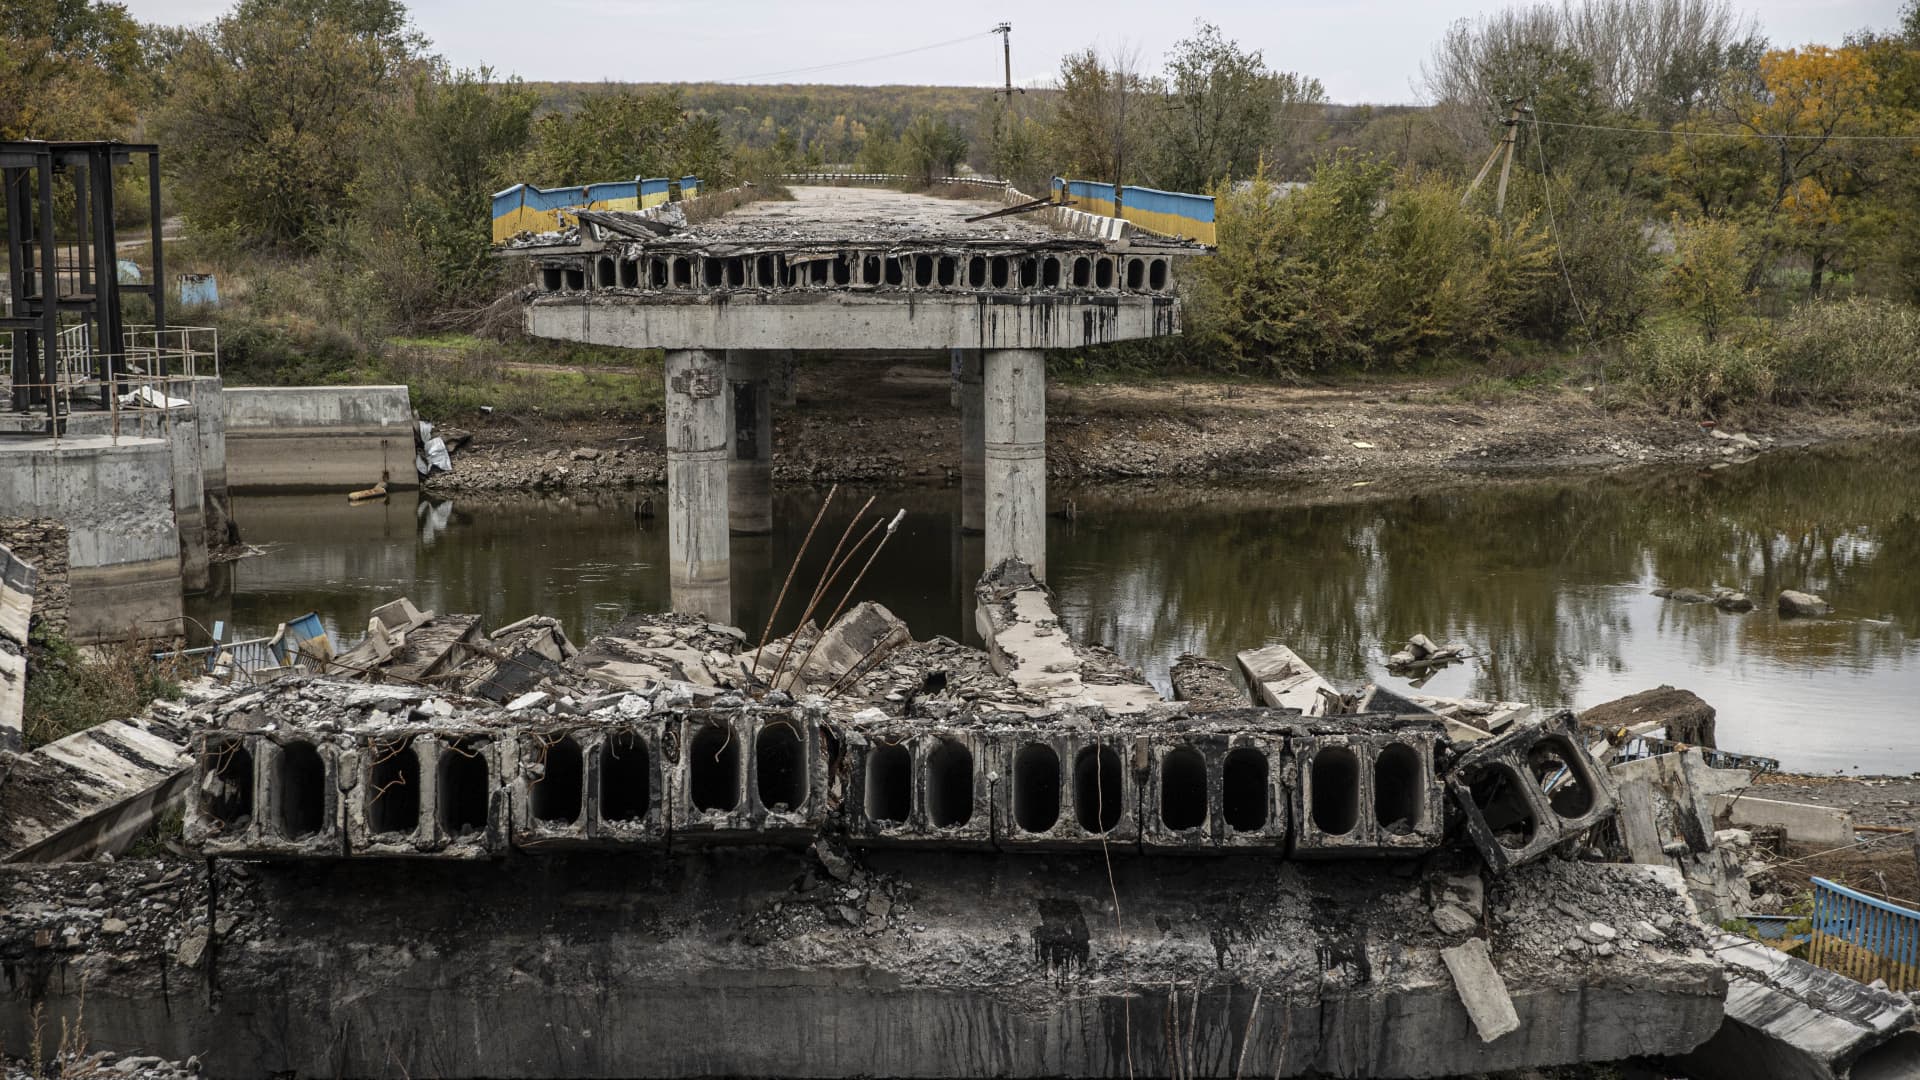 Damaged parts of Velyka Oleksandrivka town, in the Kherson region, on Oct. 24, 2022.